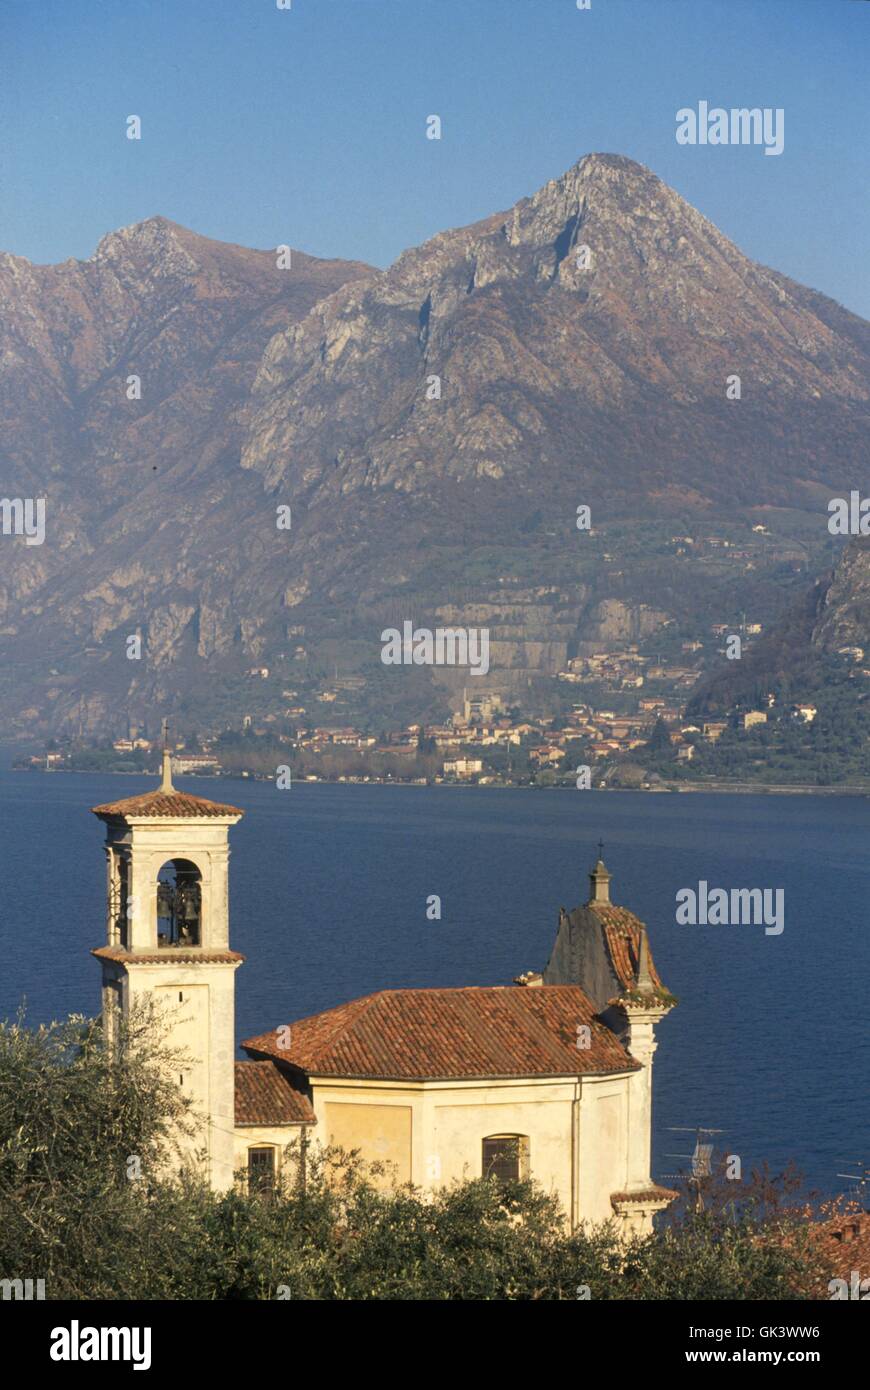 Italy, Lombardy region, Iseo lake, the St. John of Sardines church in Carzano village on Montisola island Stock Photo